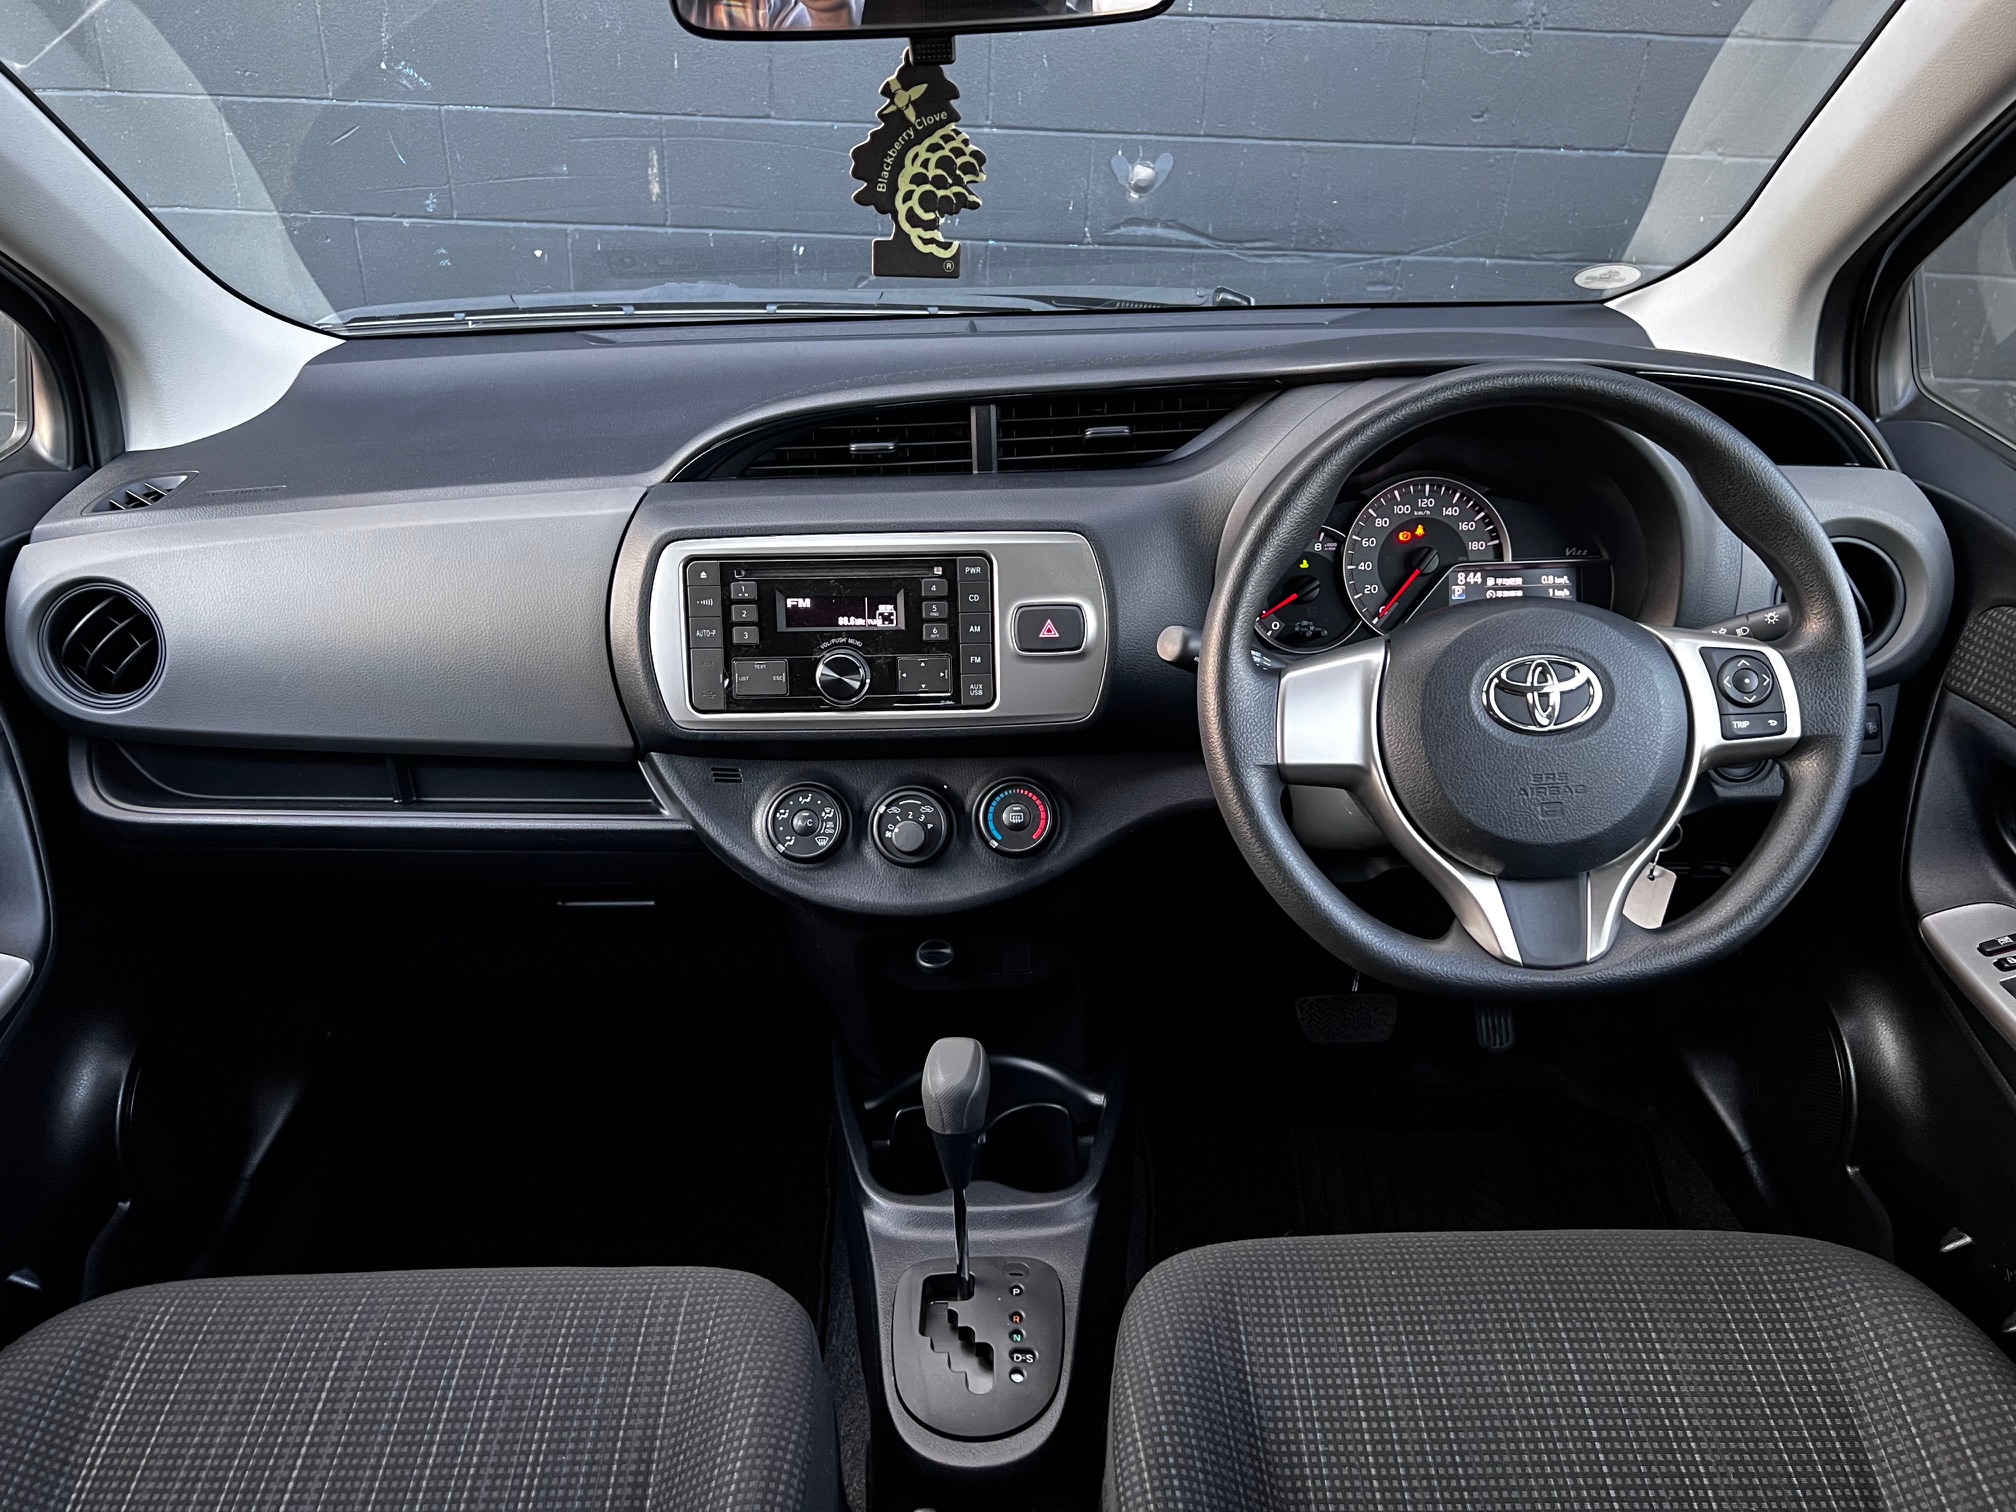 Toyota Vitz 2014 Image 12